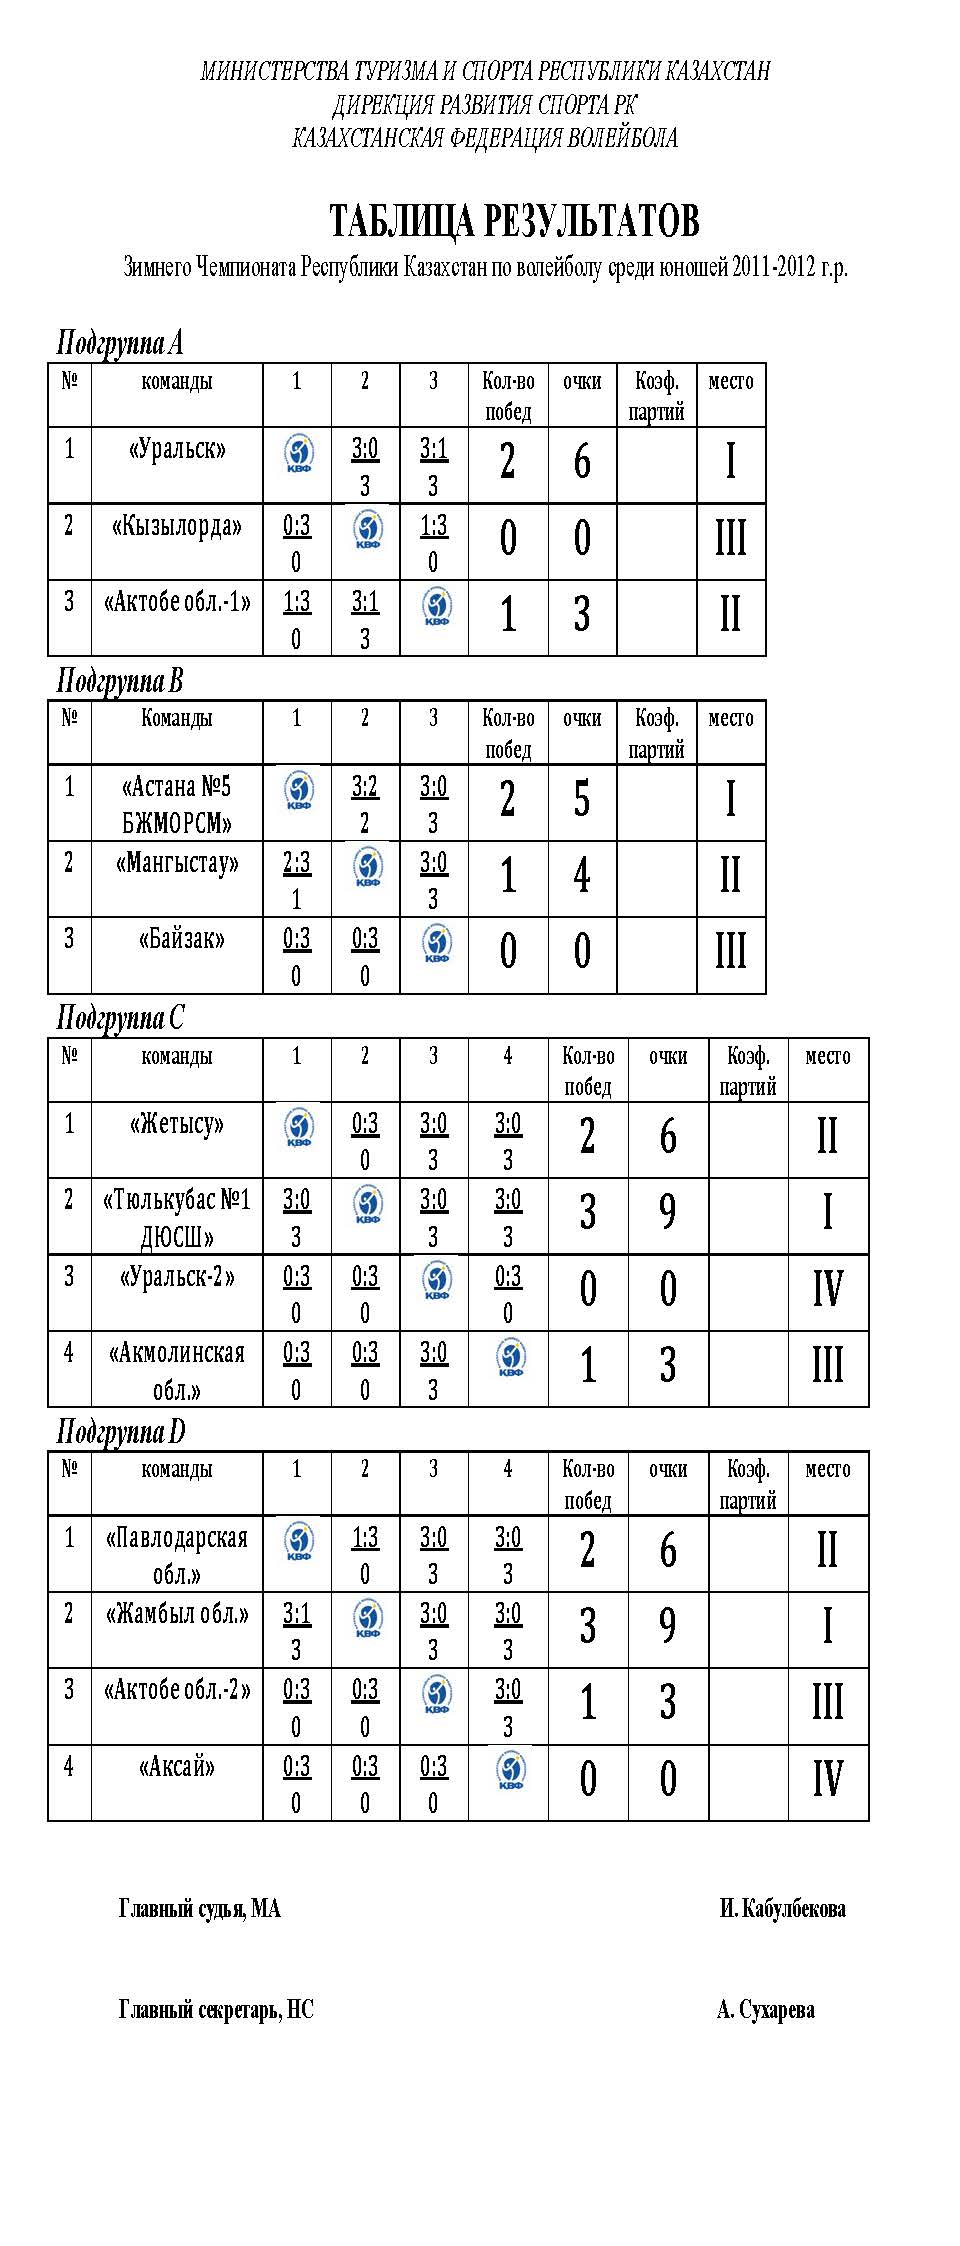 4=таблицы зимнего ЧРК 2011-2012.jpg